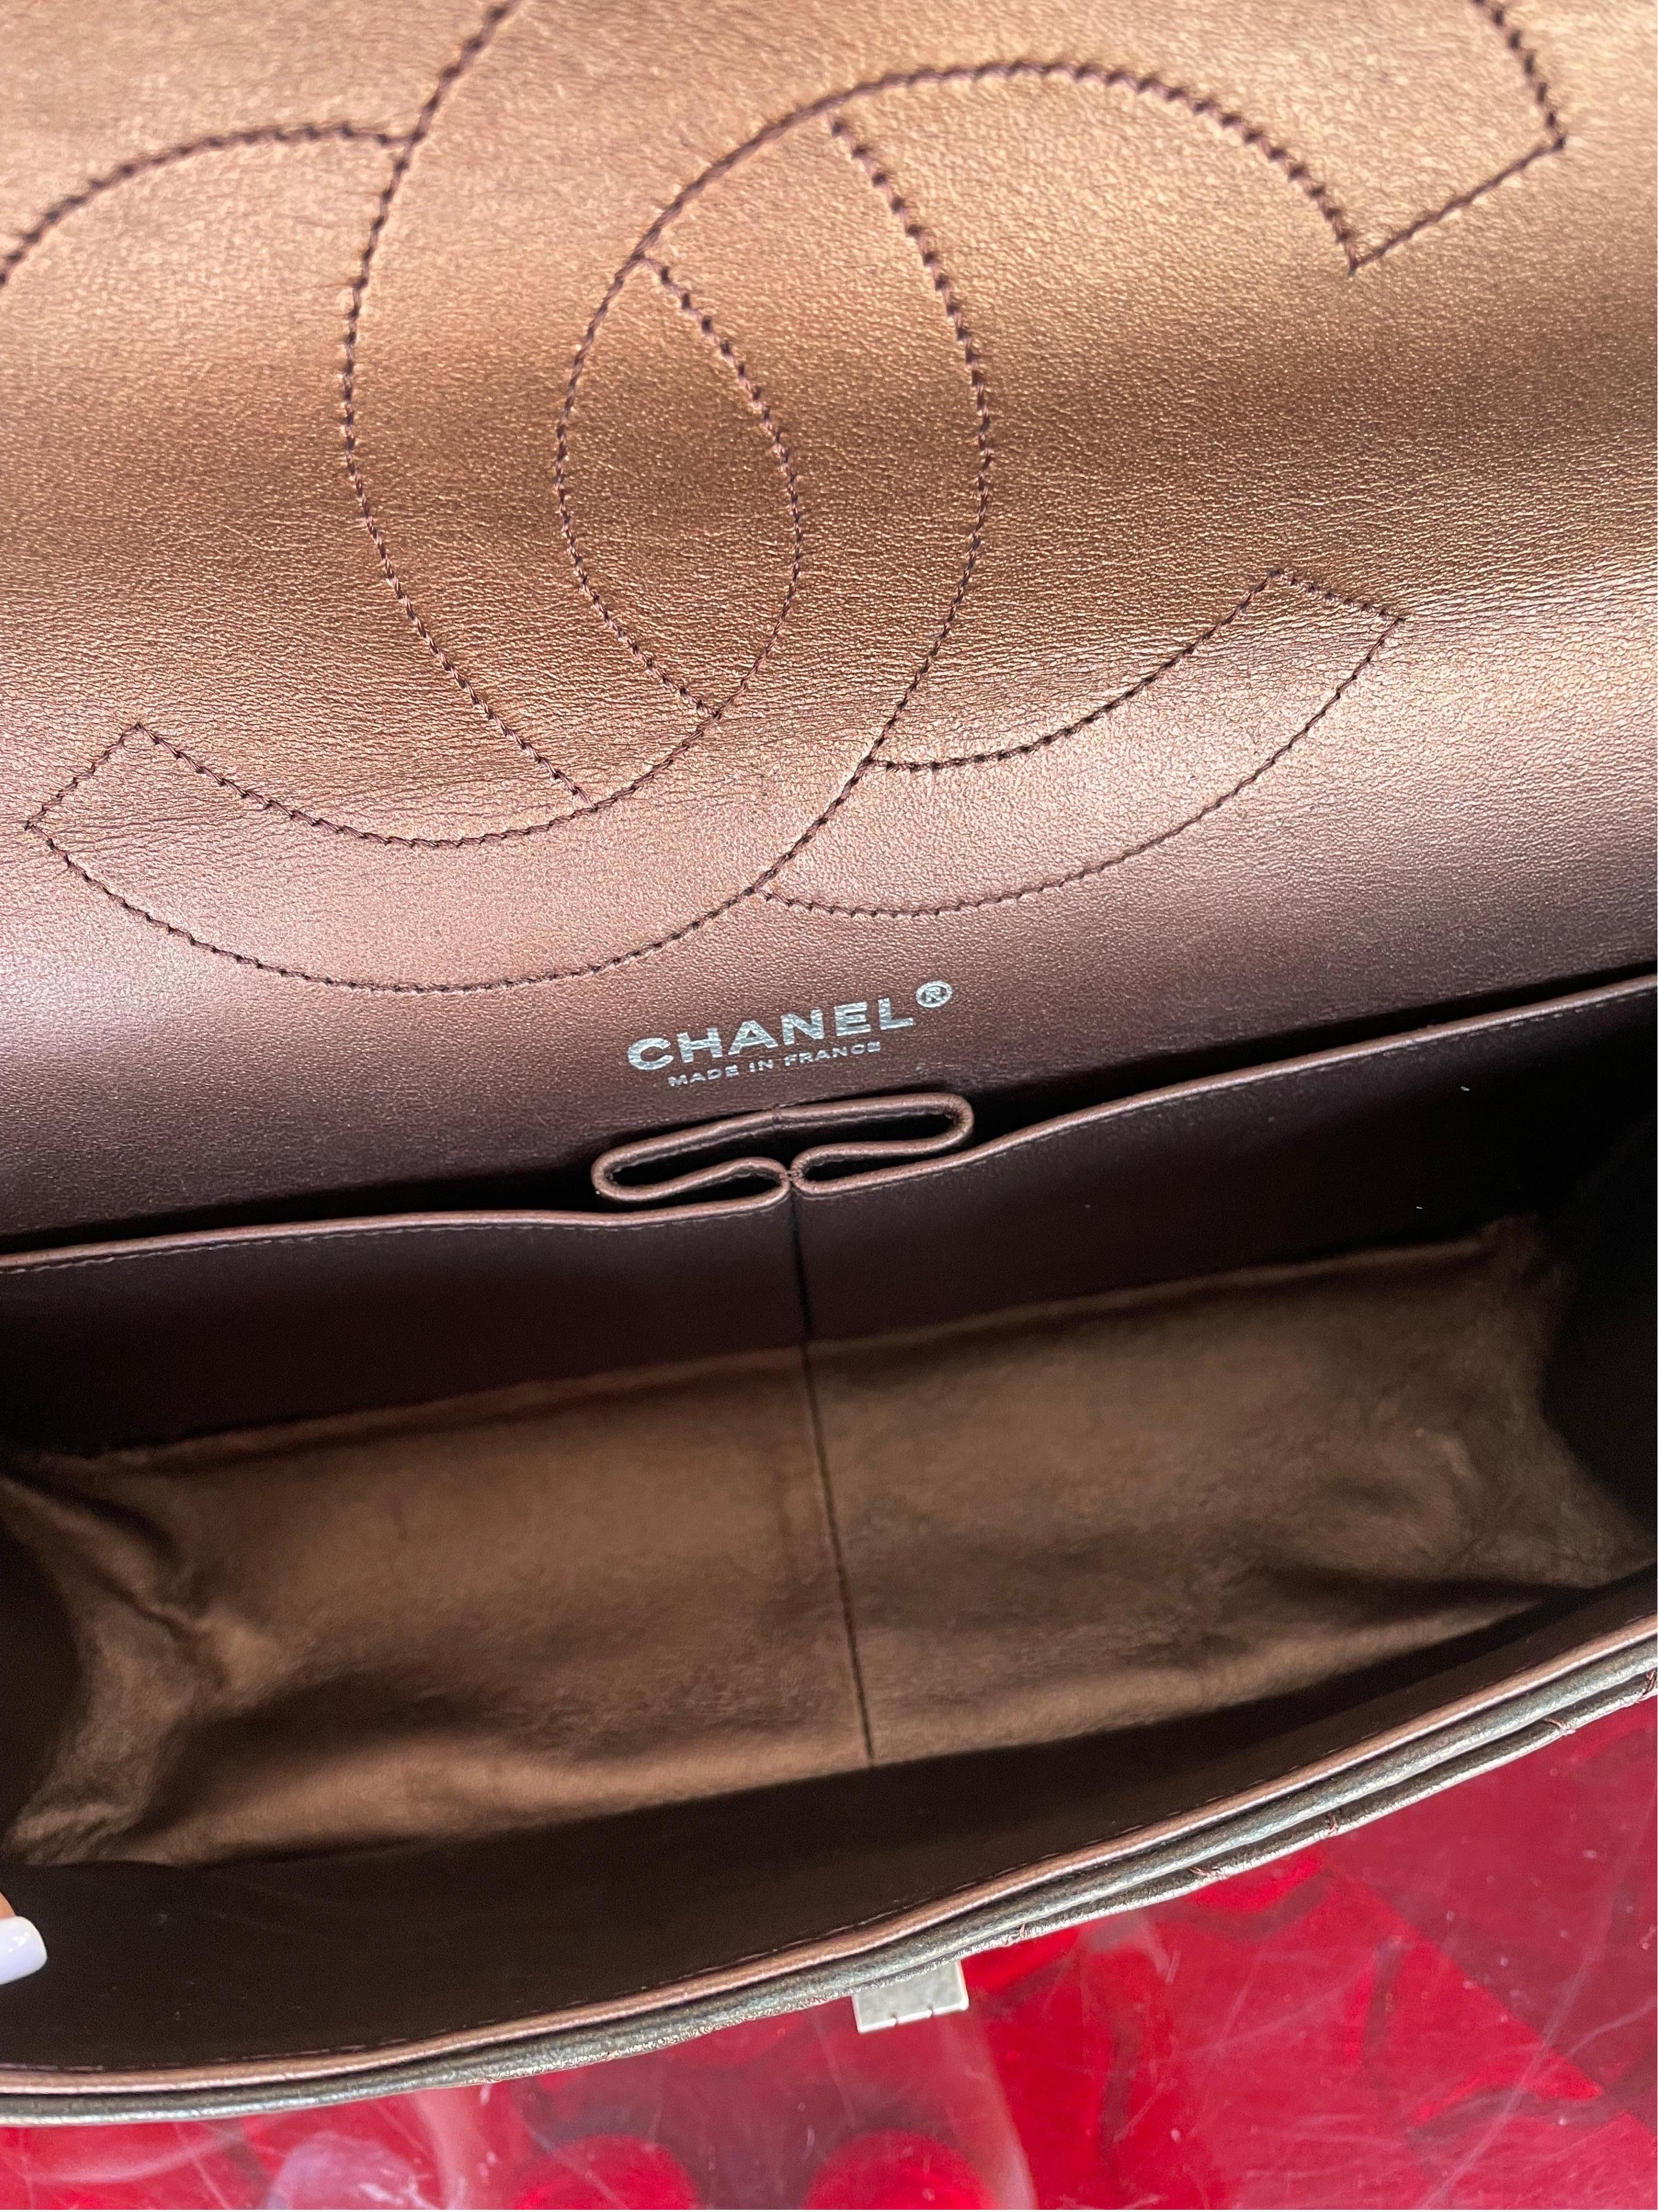 Chanel 2.55 Reissue bronze bag 1